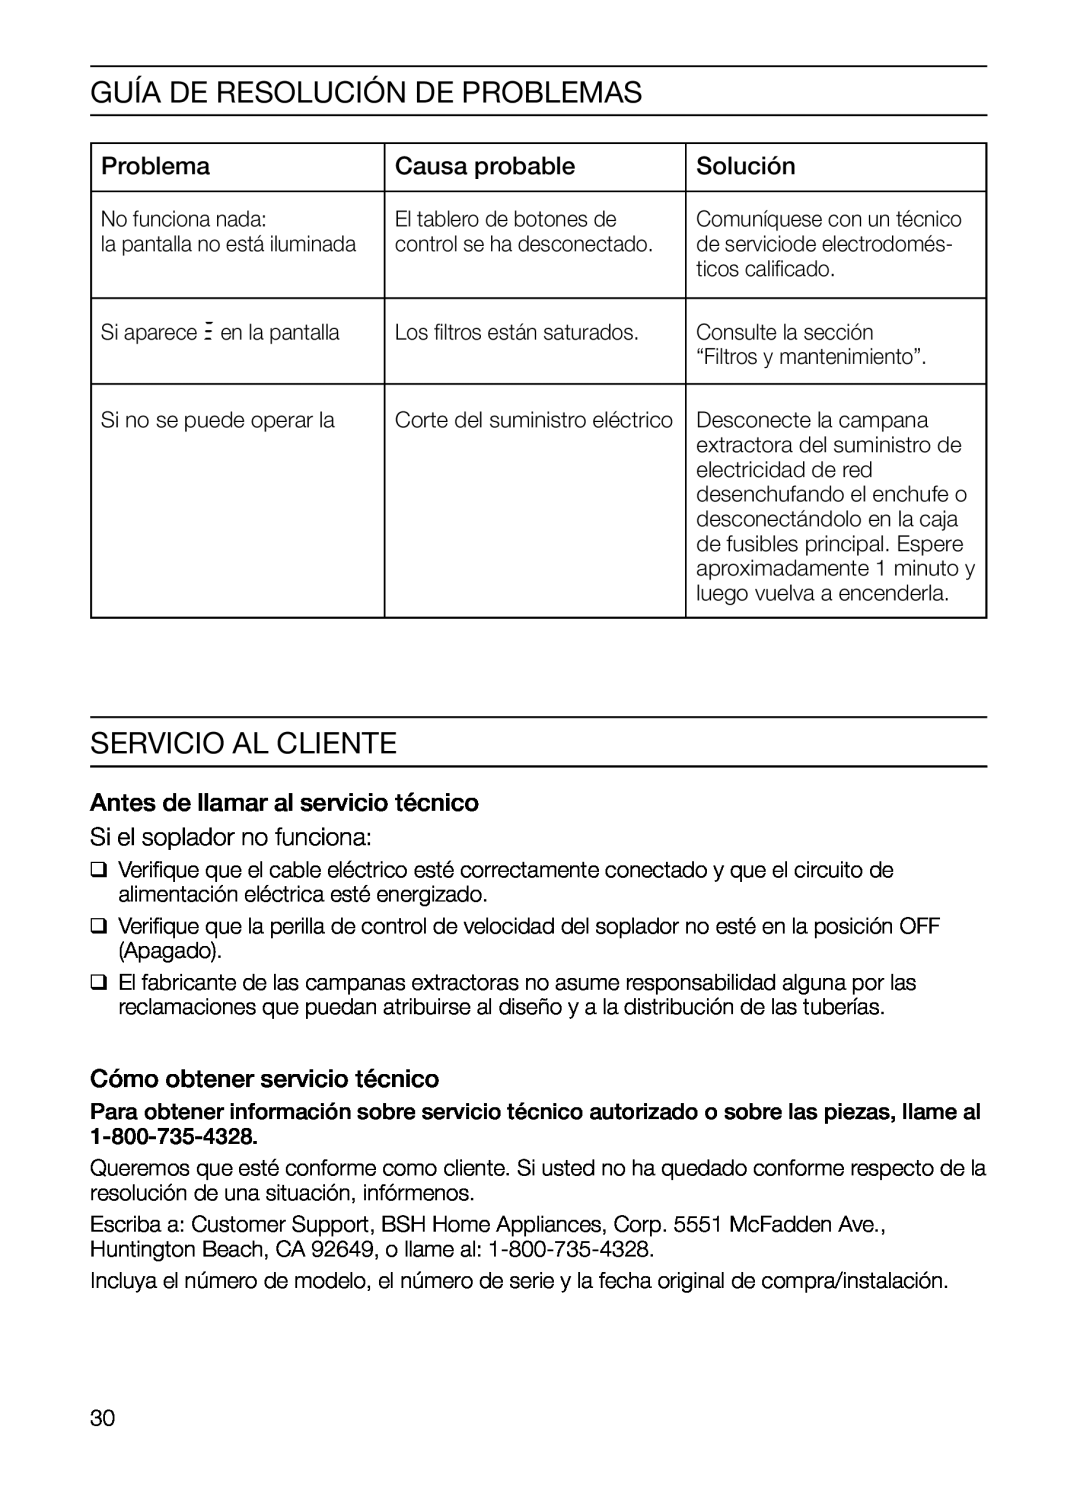 Thermador HGEW36FS manual Guía De Resolución De Problemas, Servicio Al Cliente, Causa probable, Solución 